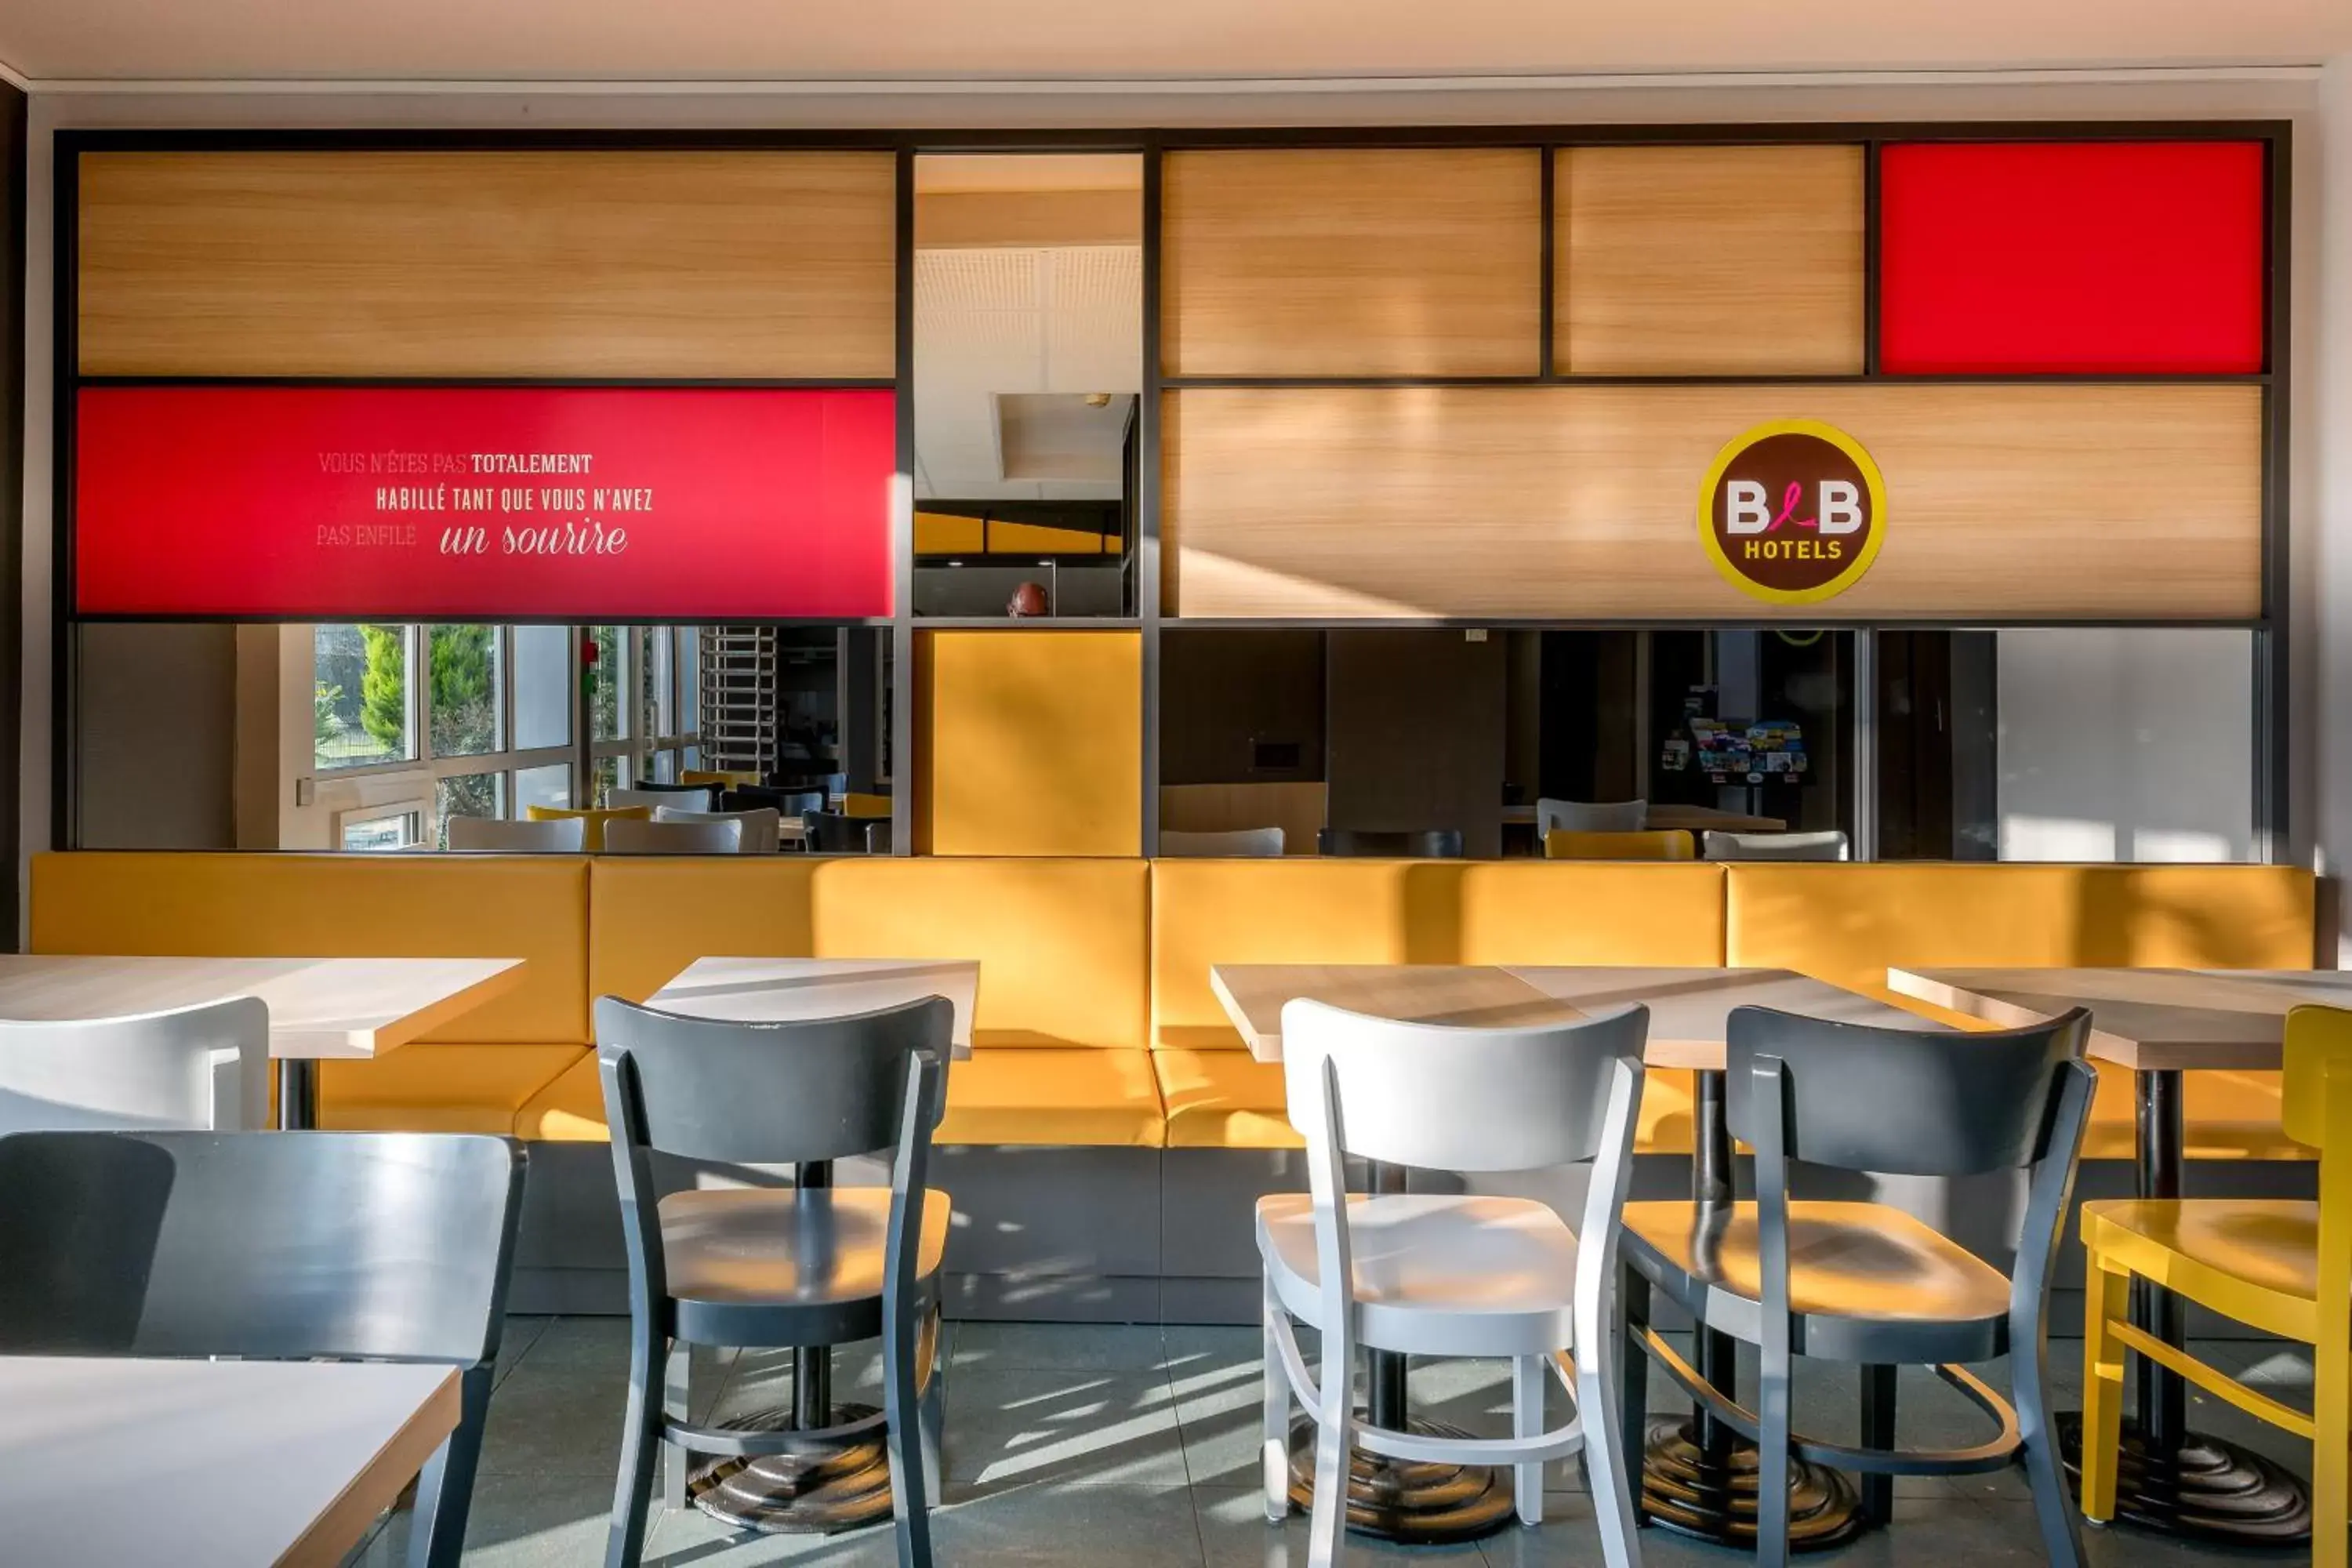 Buffet breakfast, Restaurant/Places to Eat in B&B HOTEL Bordeaux Lac sur Bruges